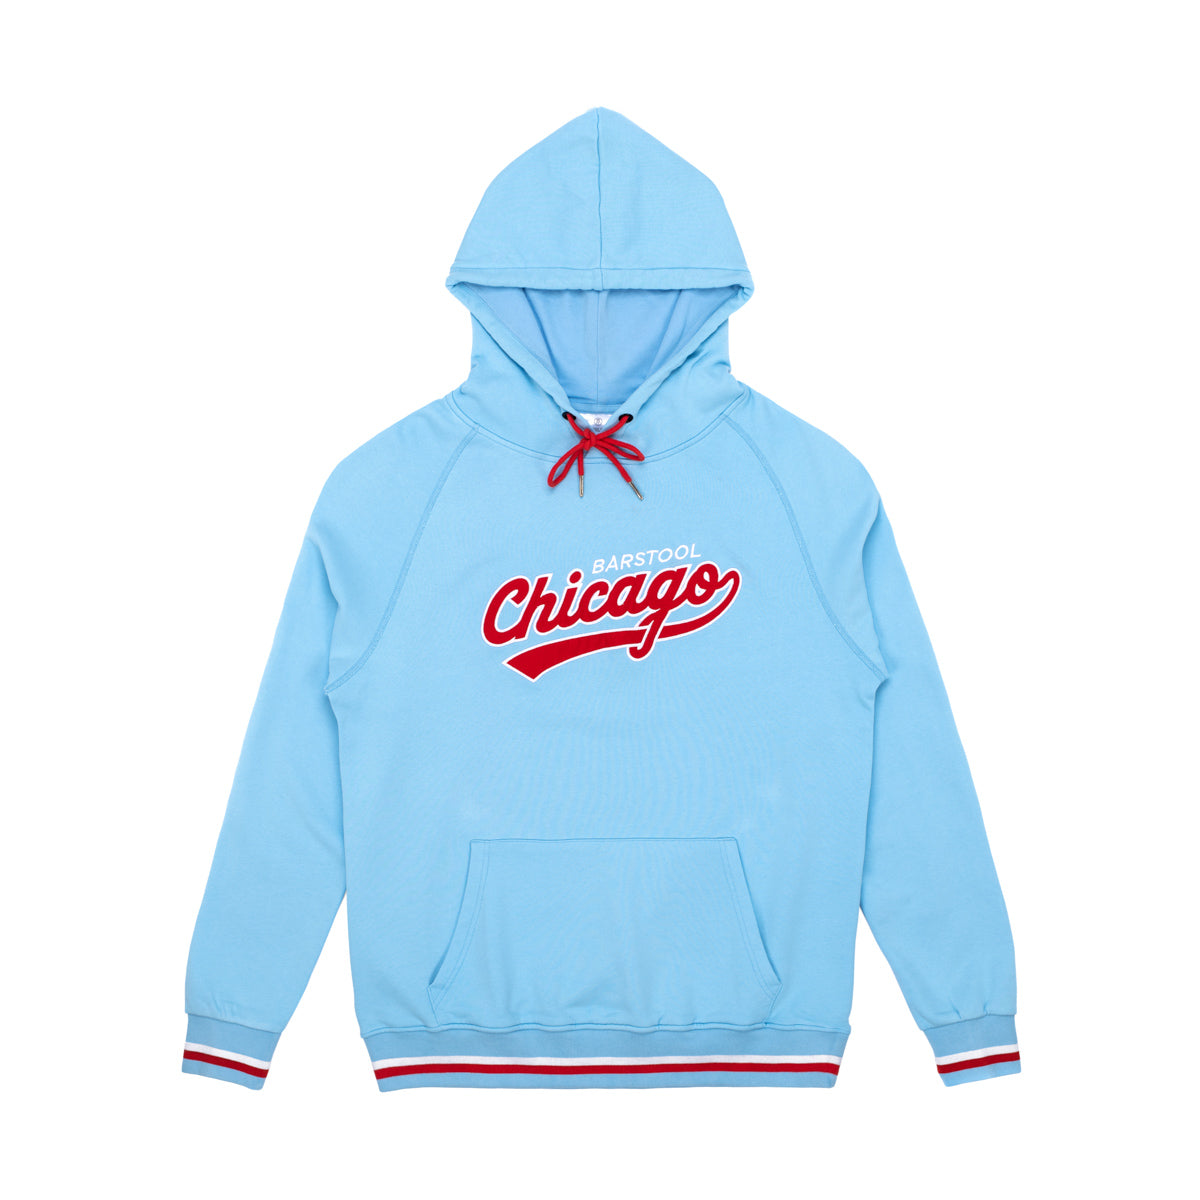 Barstool Chicago Varsity Premium Hoodie-Hoodies & Sweatshirts-Barstool Chicago-Light Blue-S-Barstool Sports